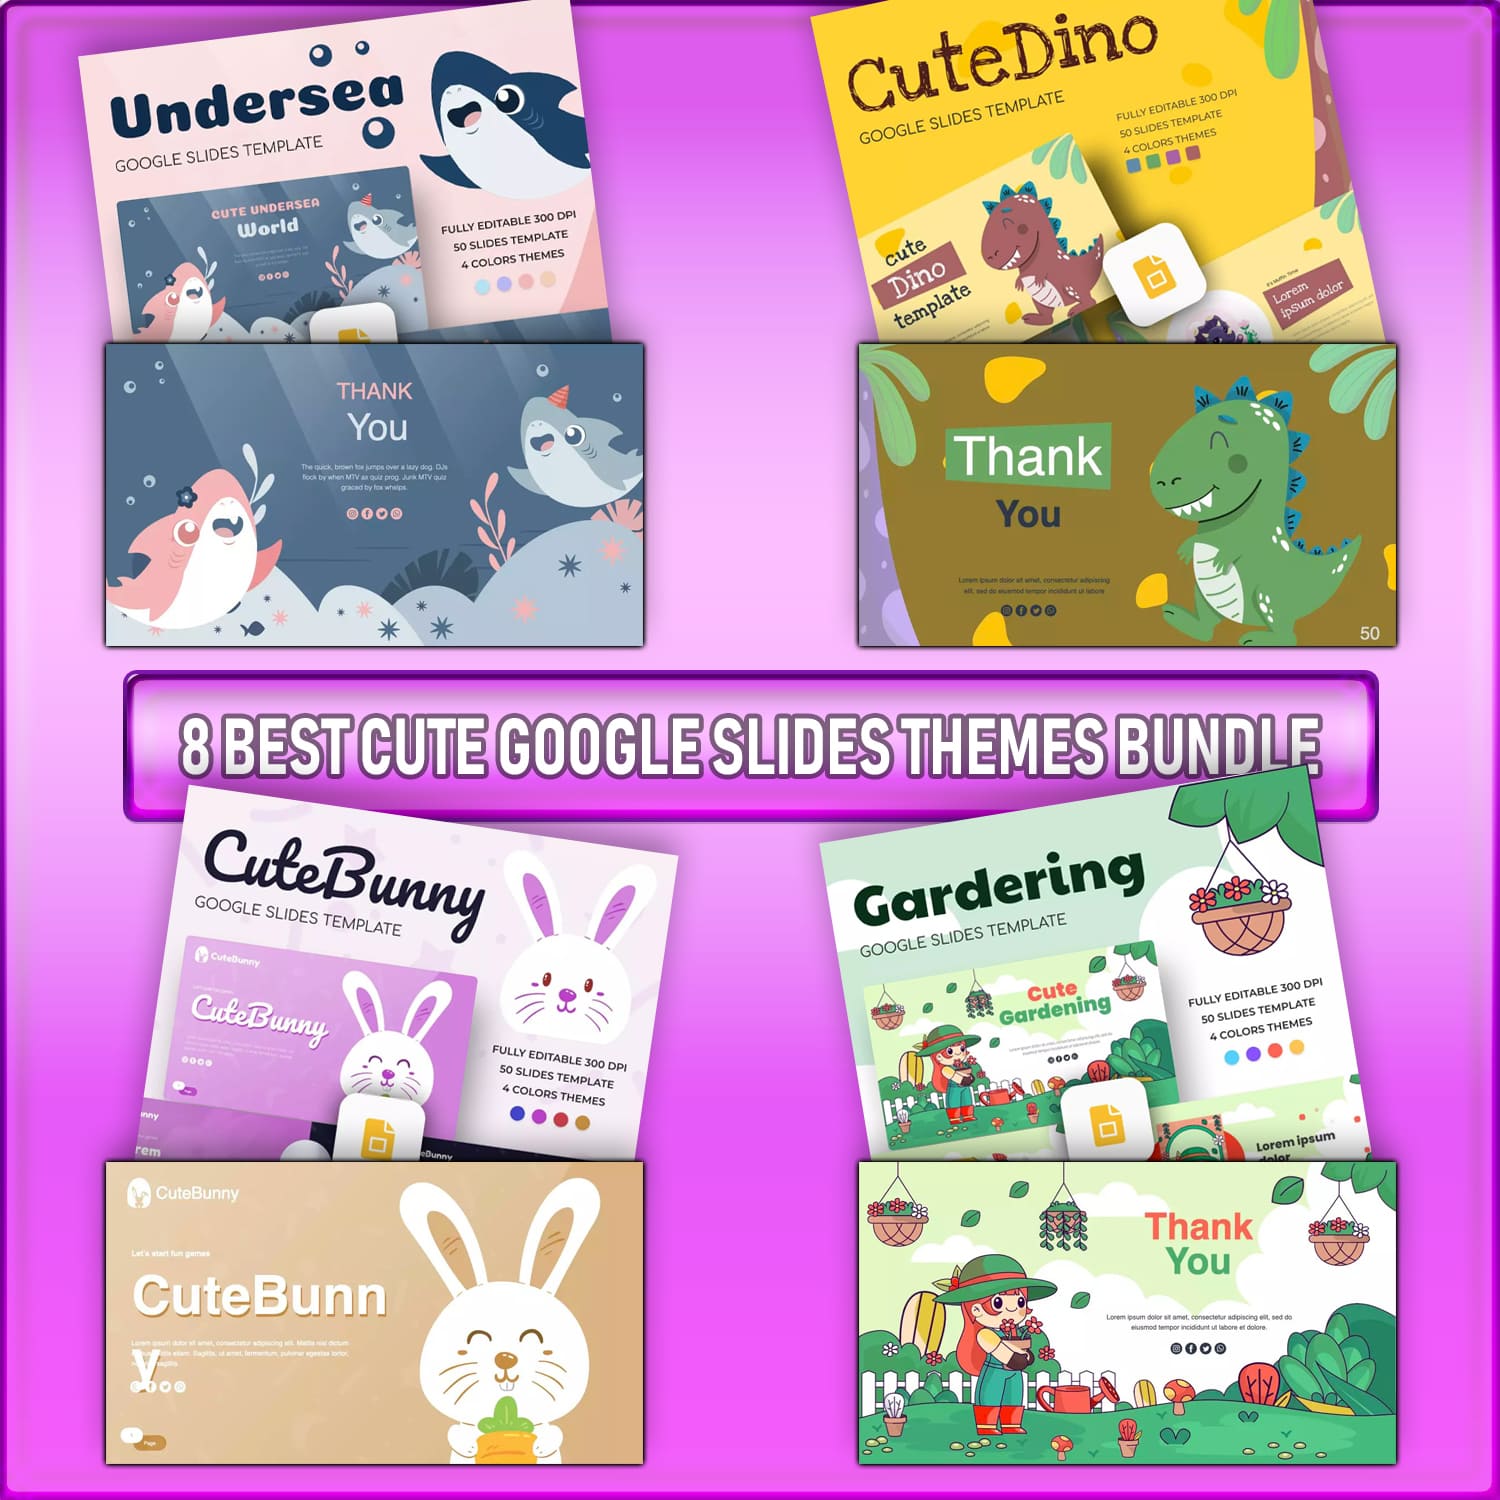 8 Best Cute Google Slides Themes Bundle cover image 2.